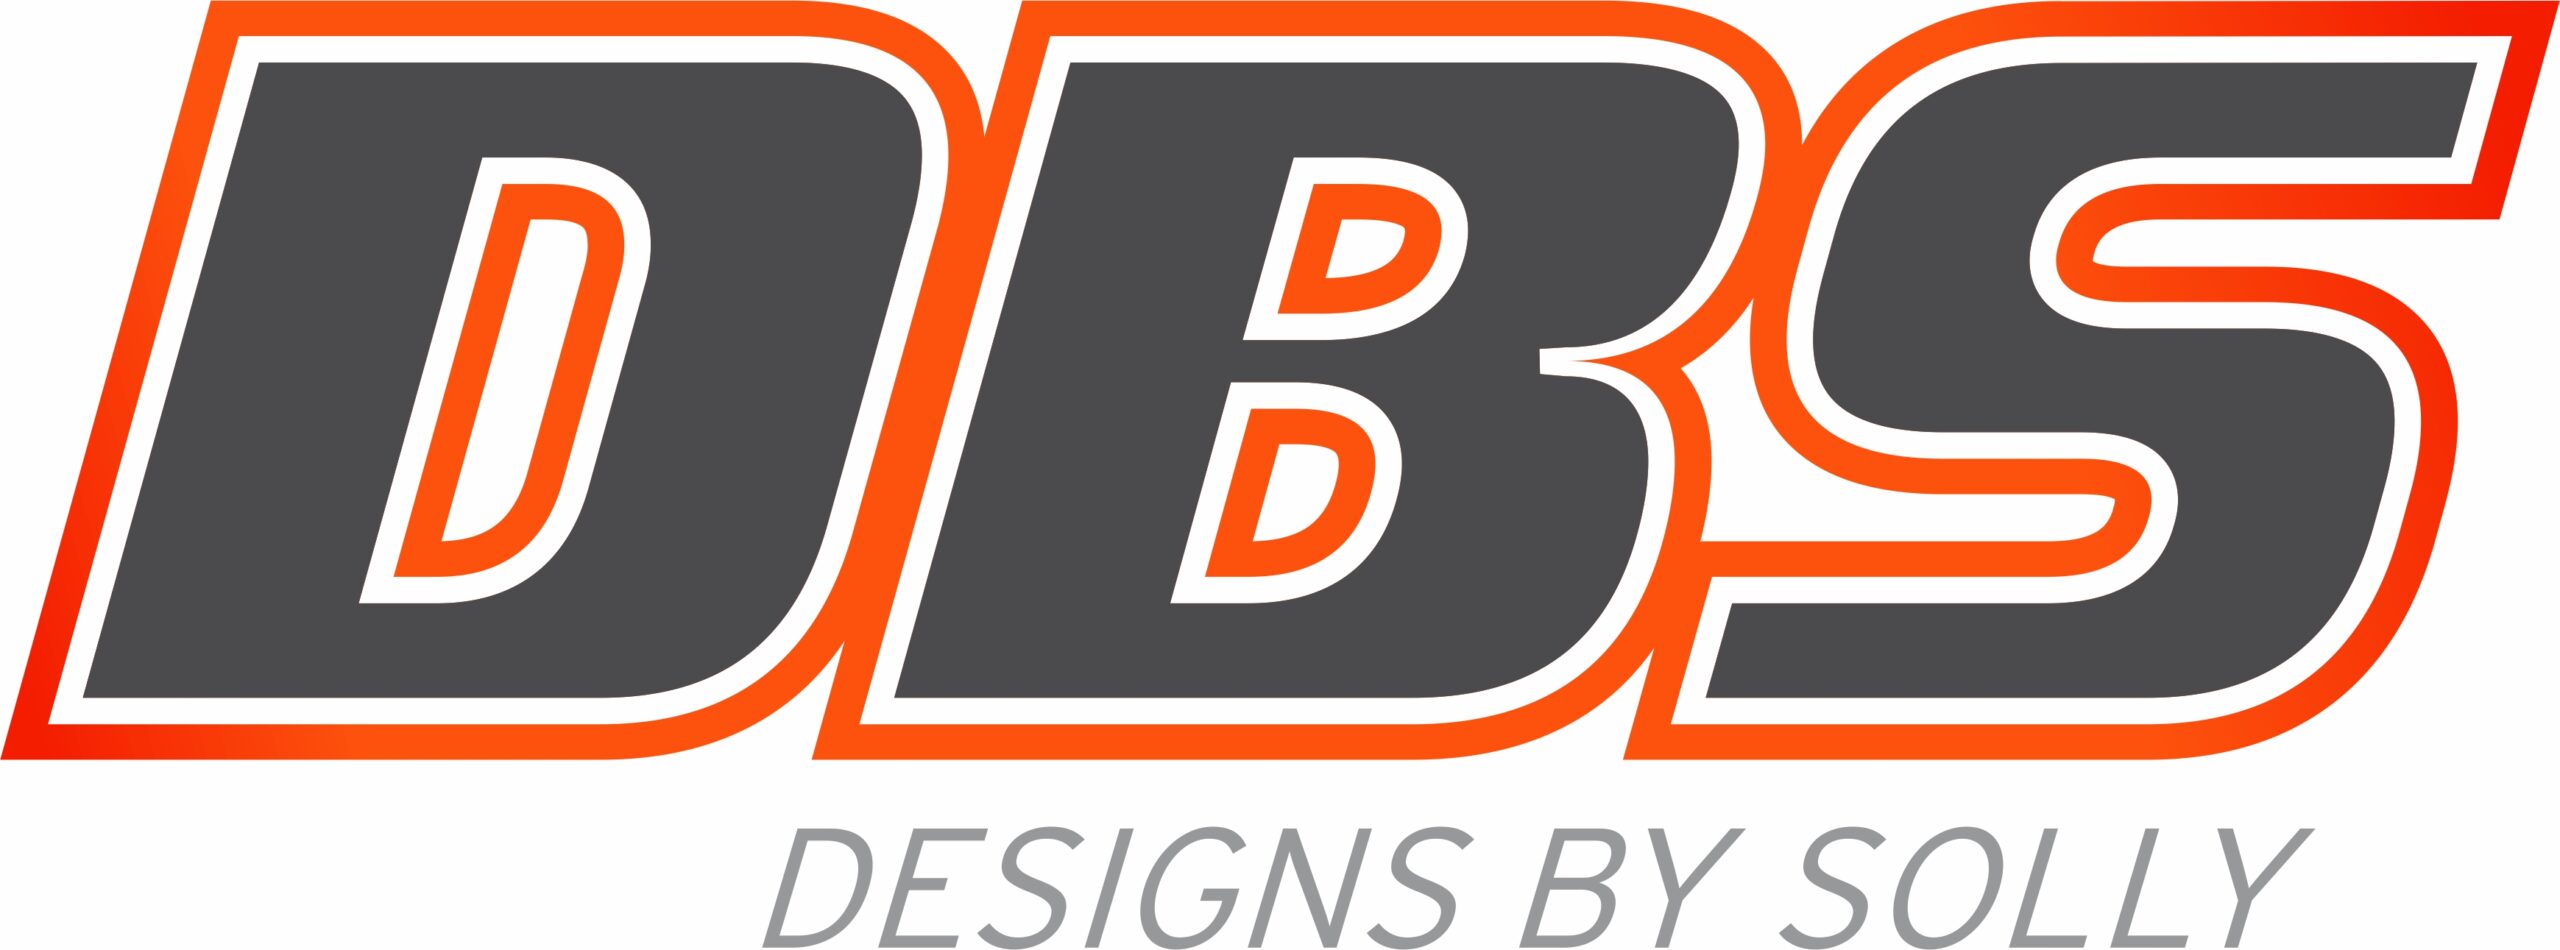 Designs By Solly Logo